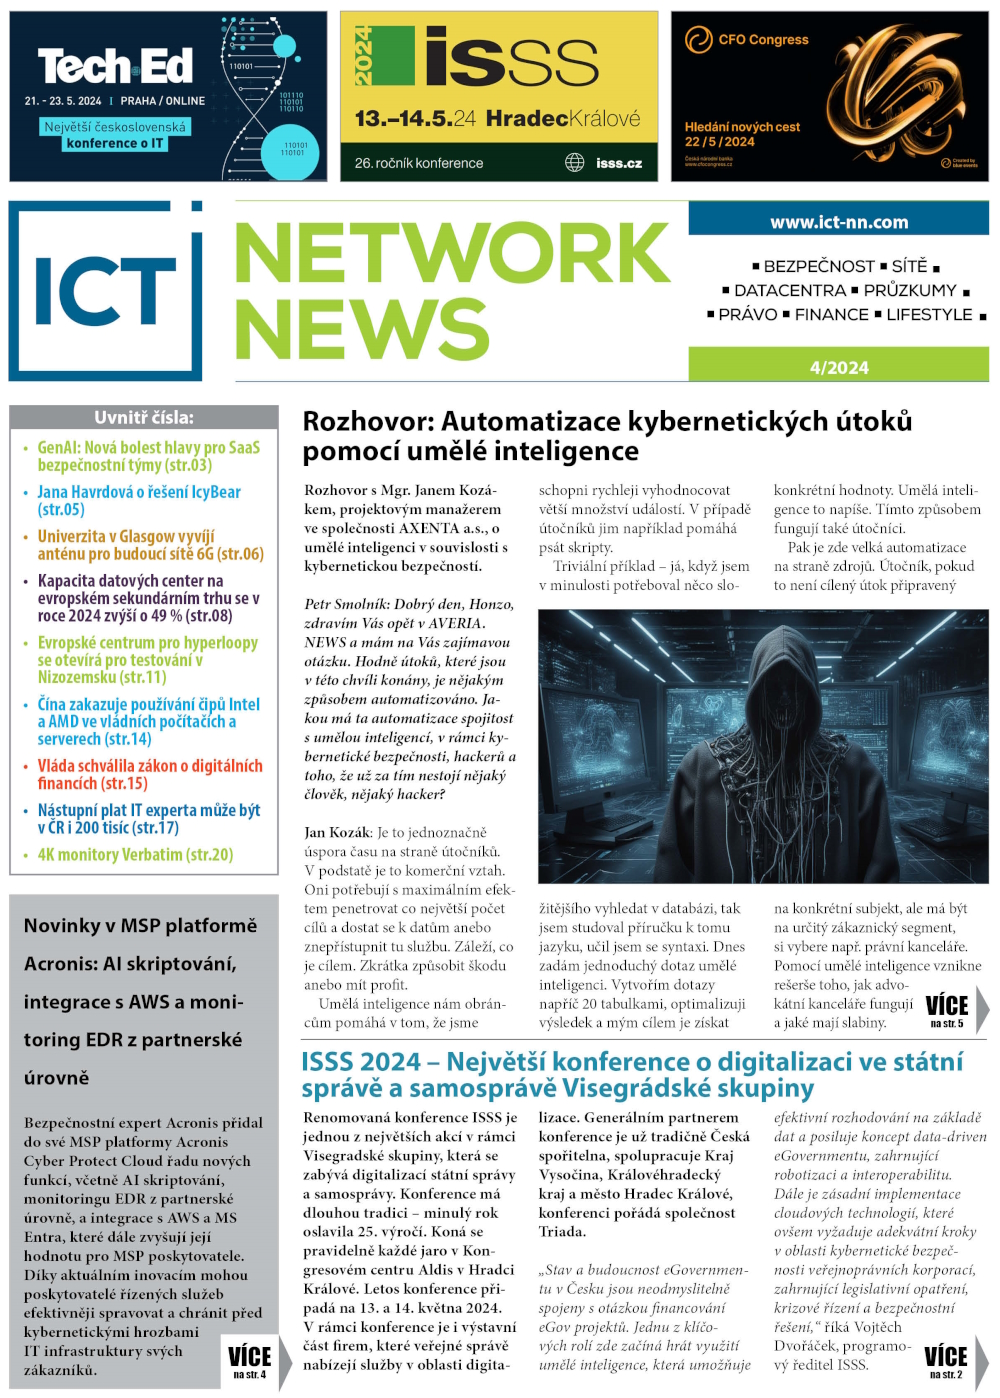 ICT NETWORK NEWS 4-2024